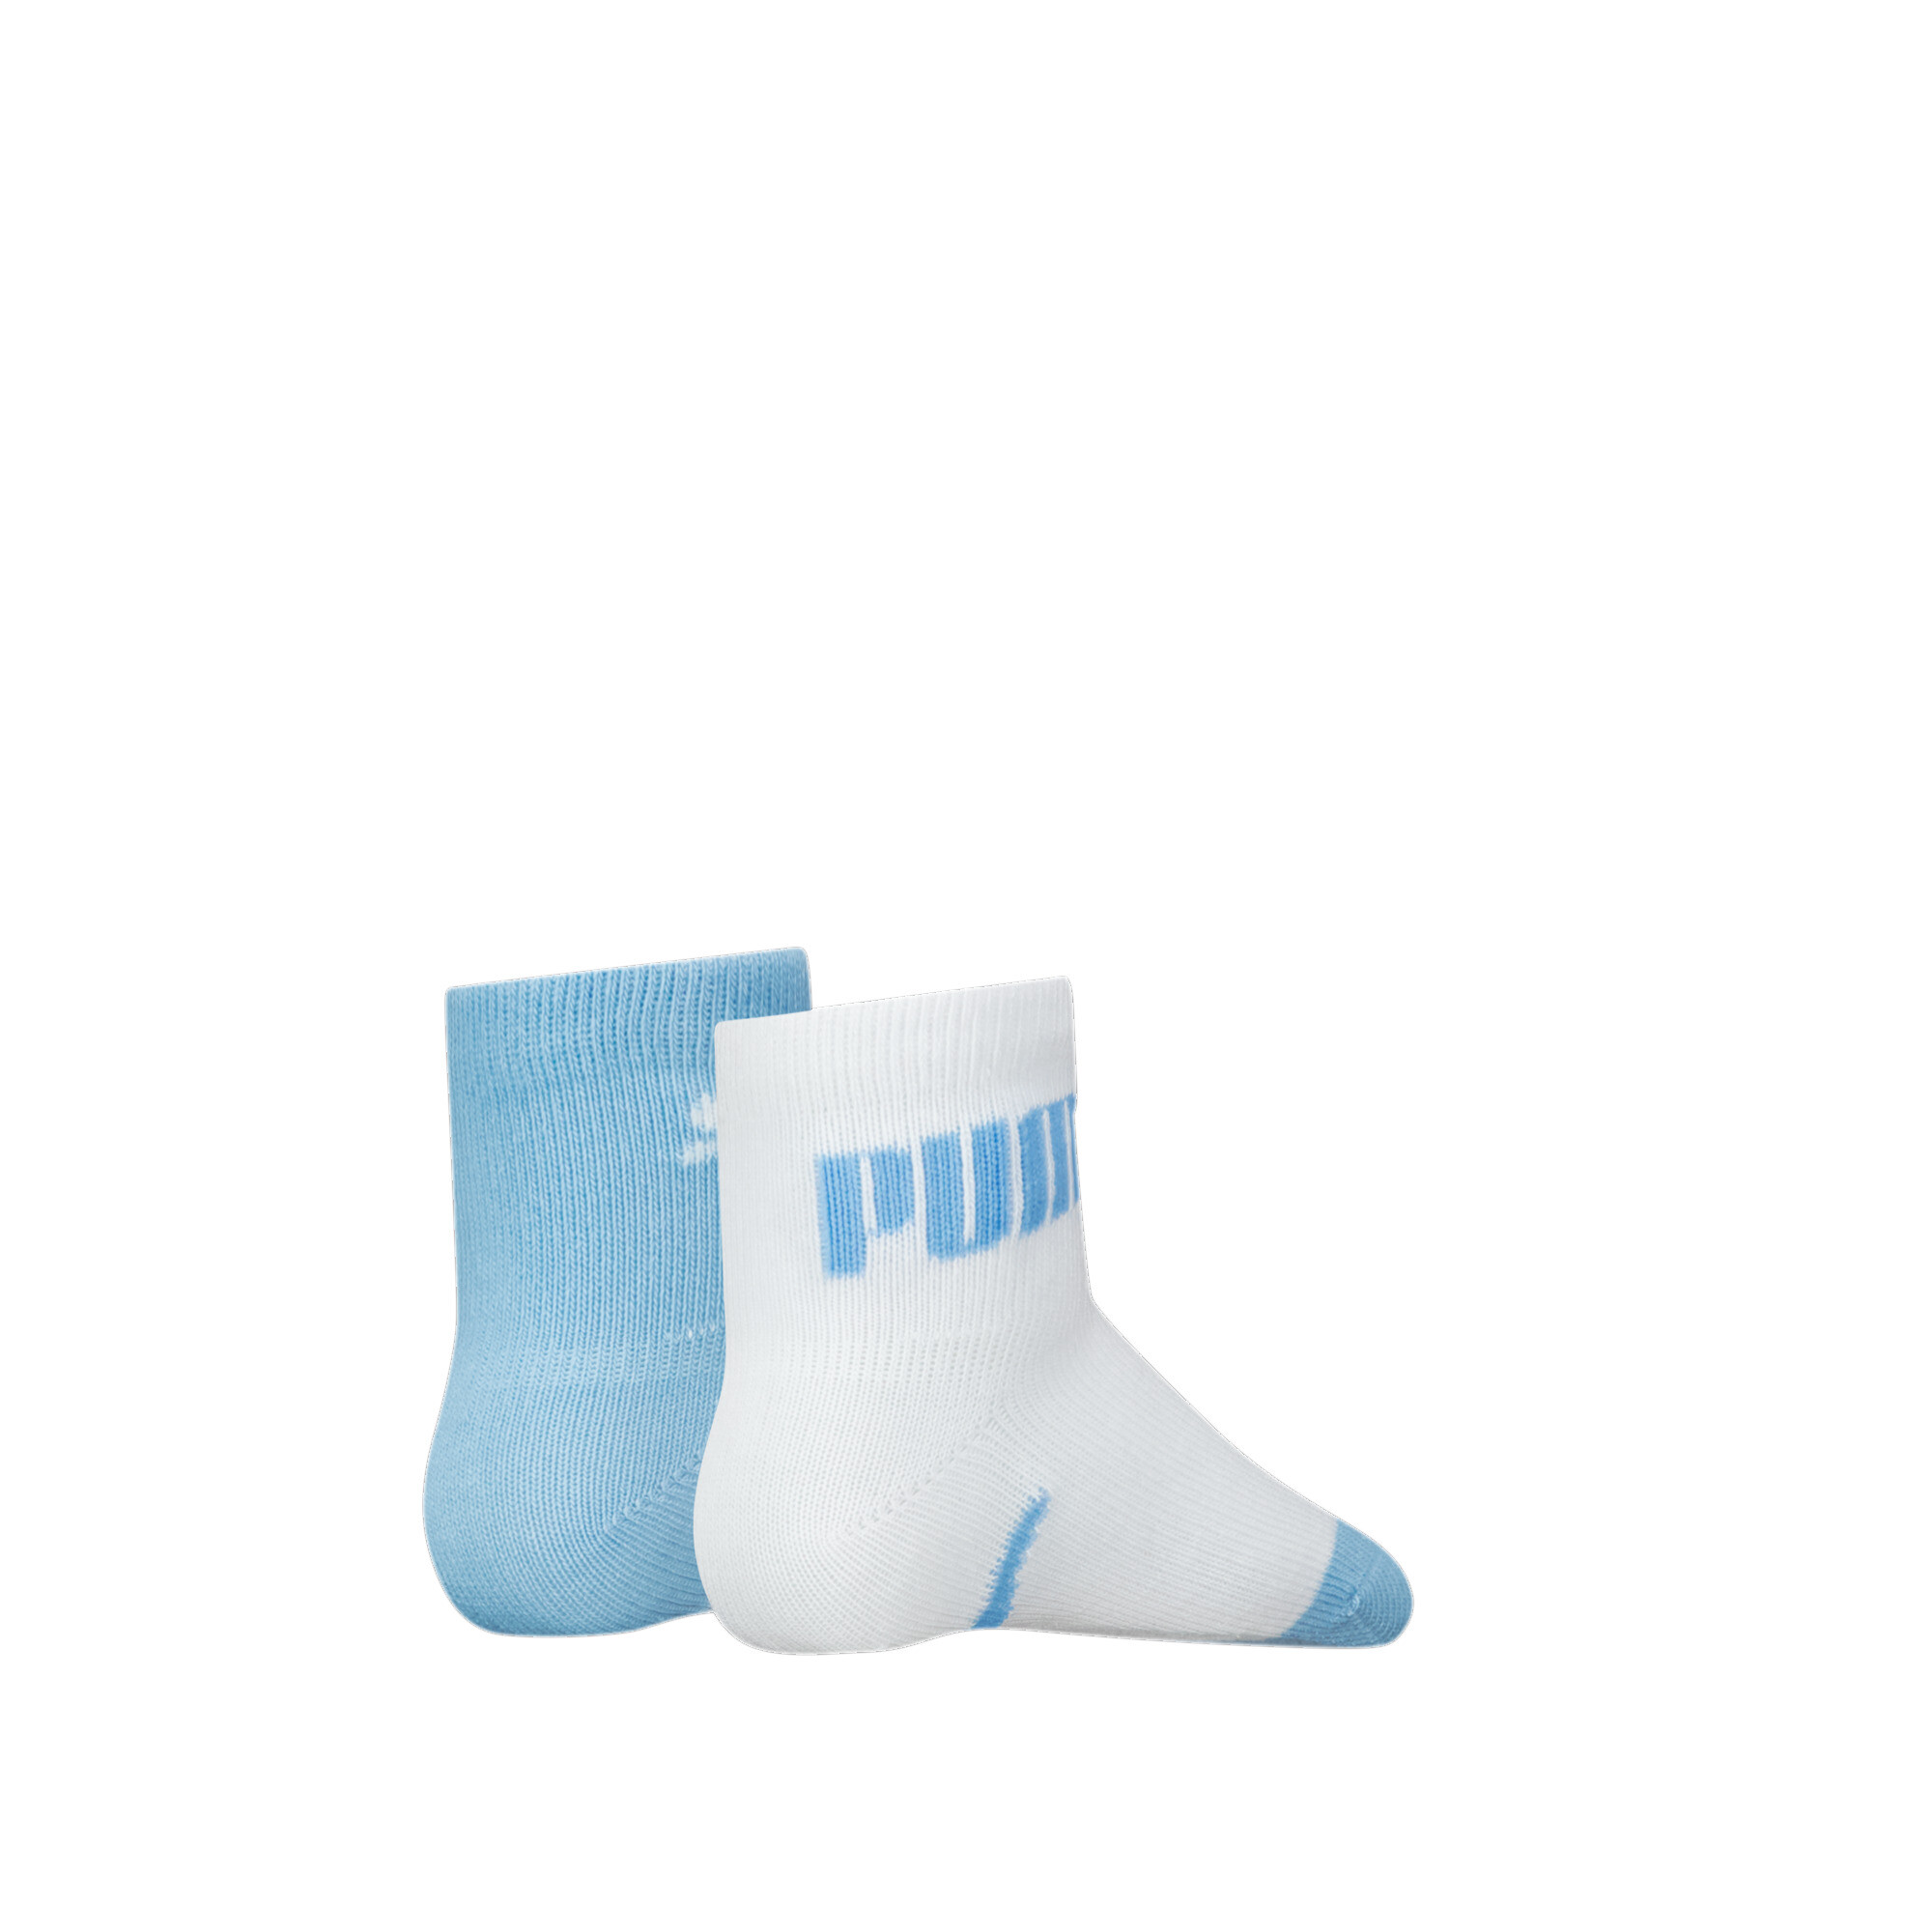 Puma Baby Classic Socks 2 Pack, Blue, Size 19-22, Age